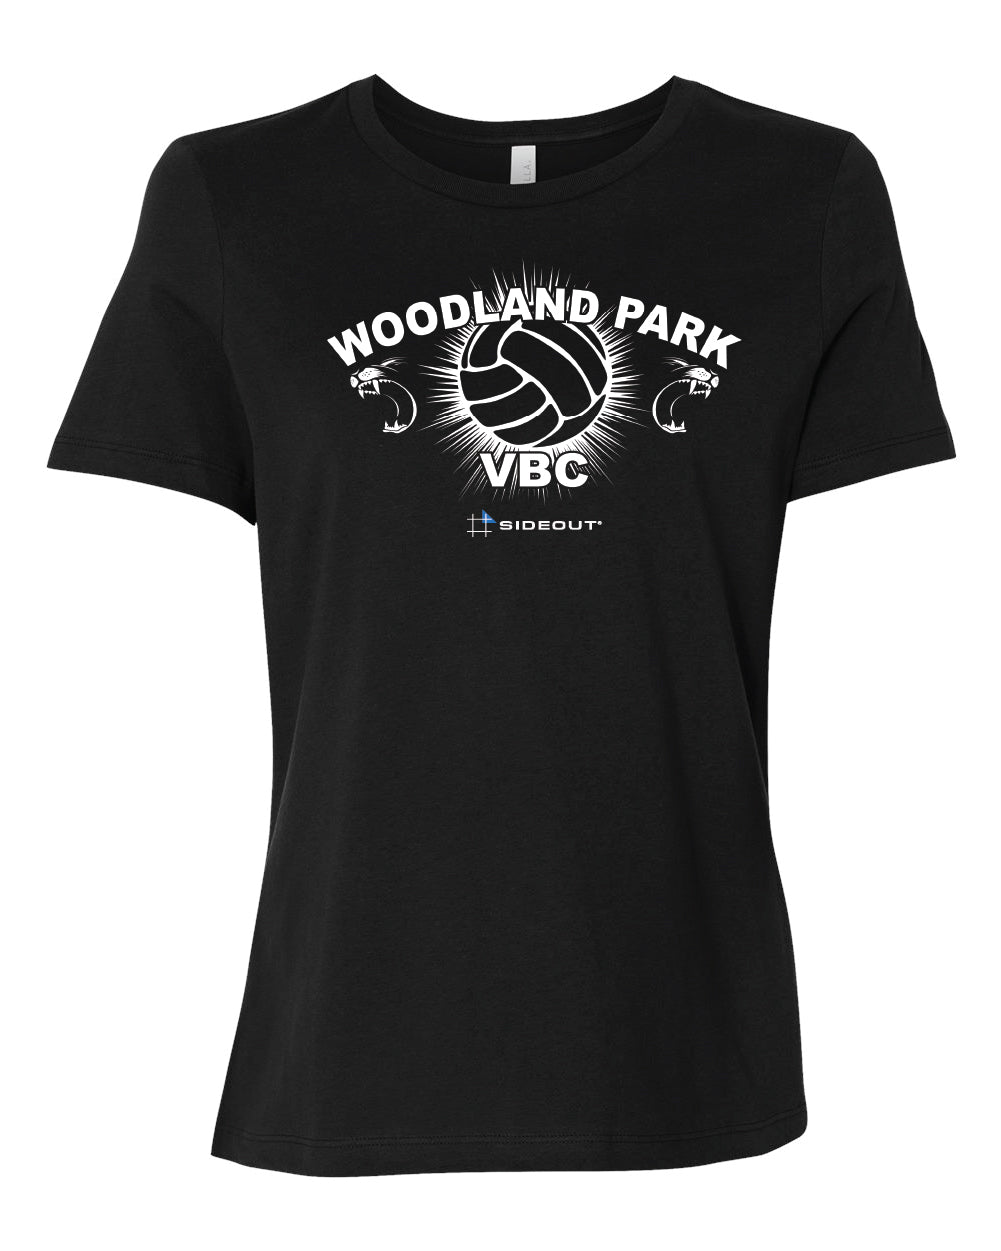 Woodland Park Women's T-Shirt Black